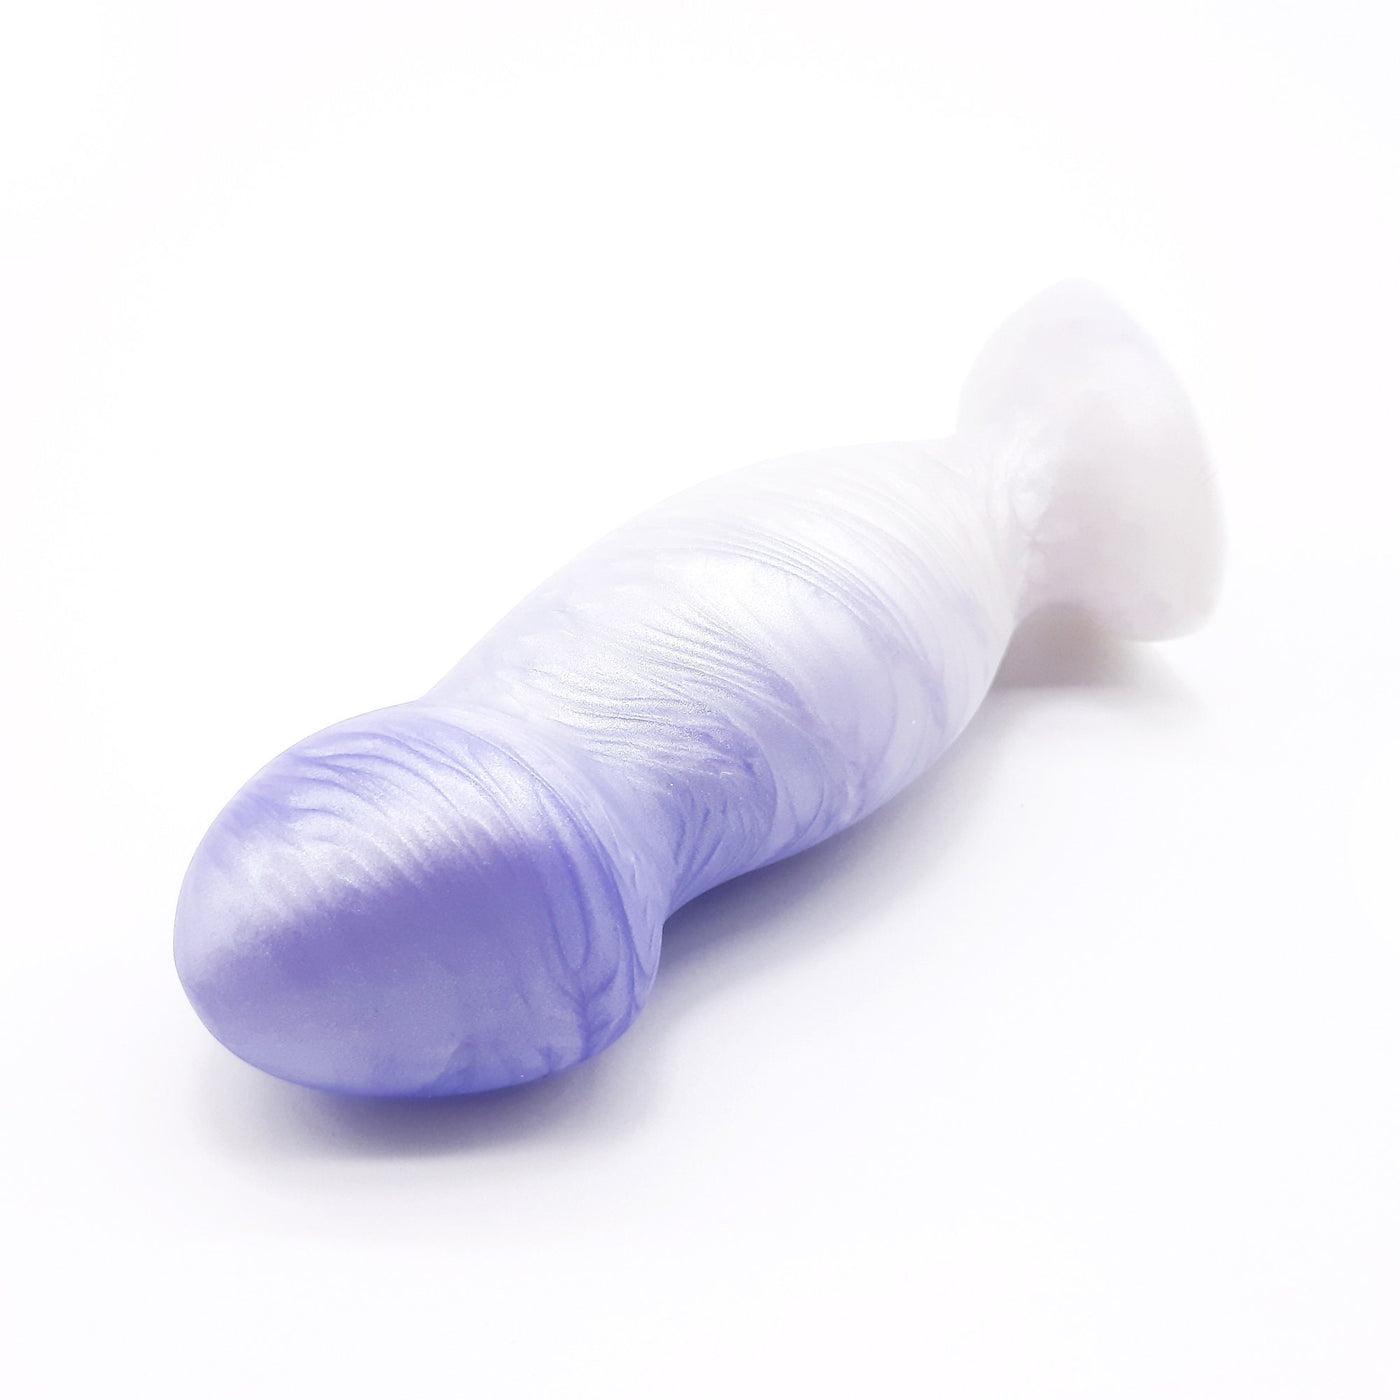 Uberrime Sensi Soft Silicone Vaginal Plug Dildo Hamilton Park Electronics